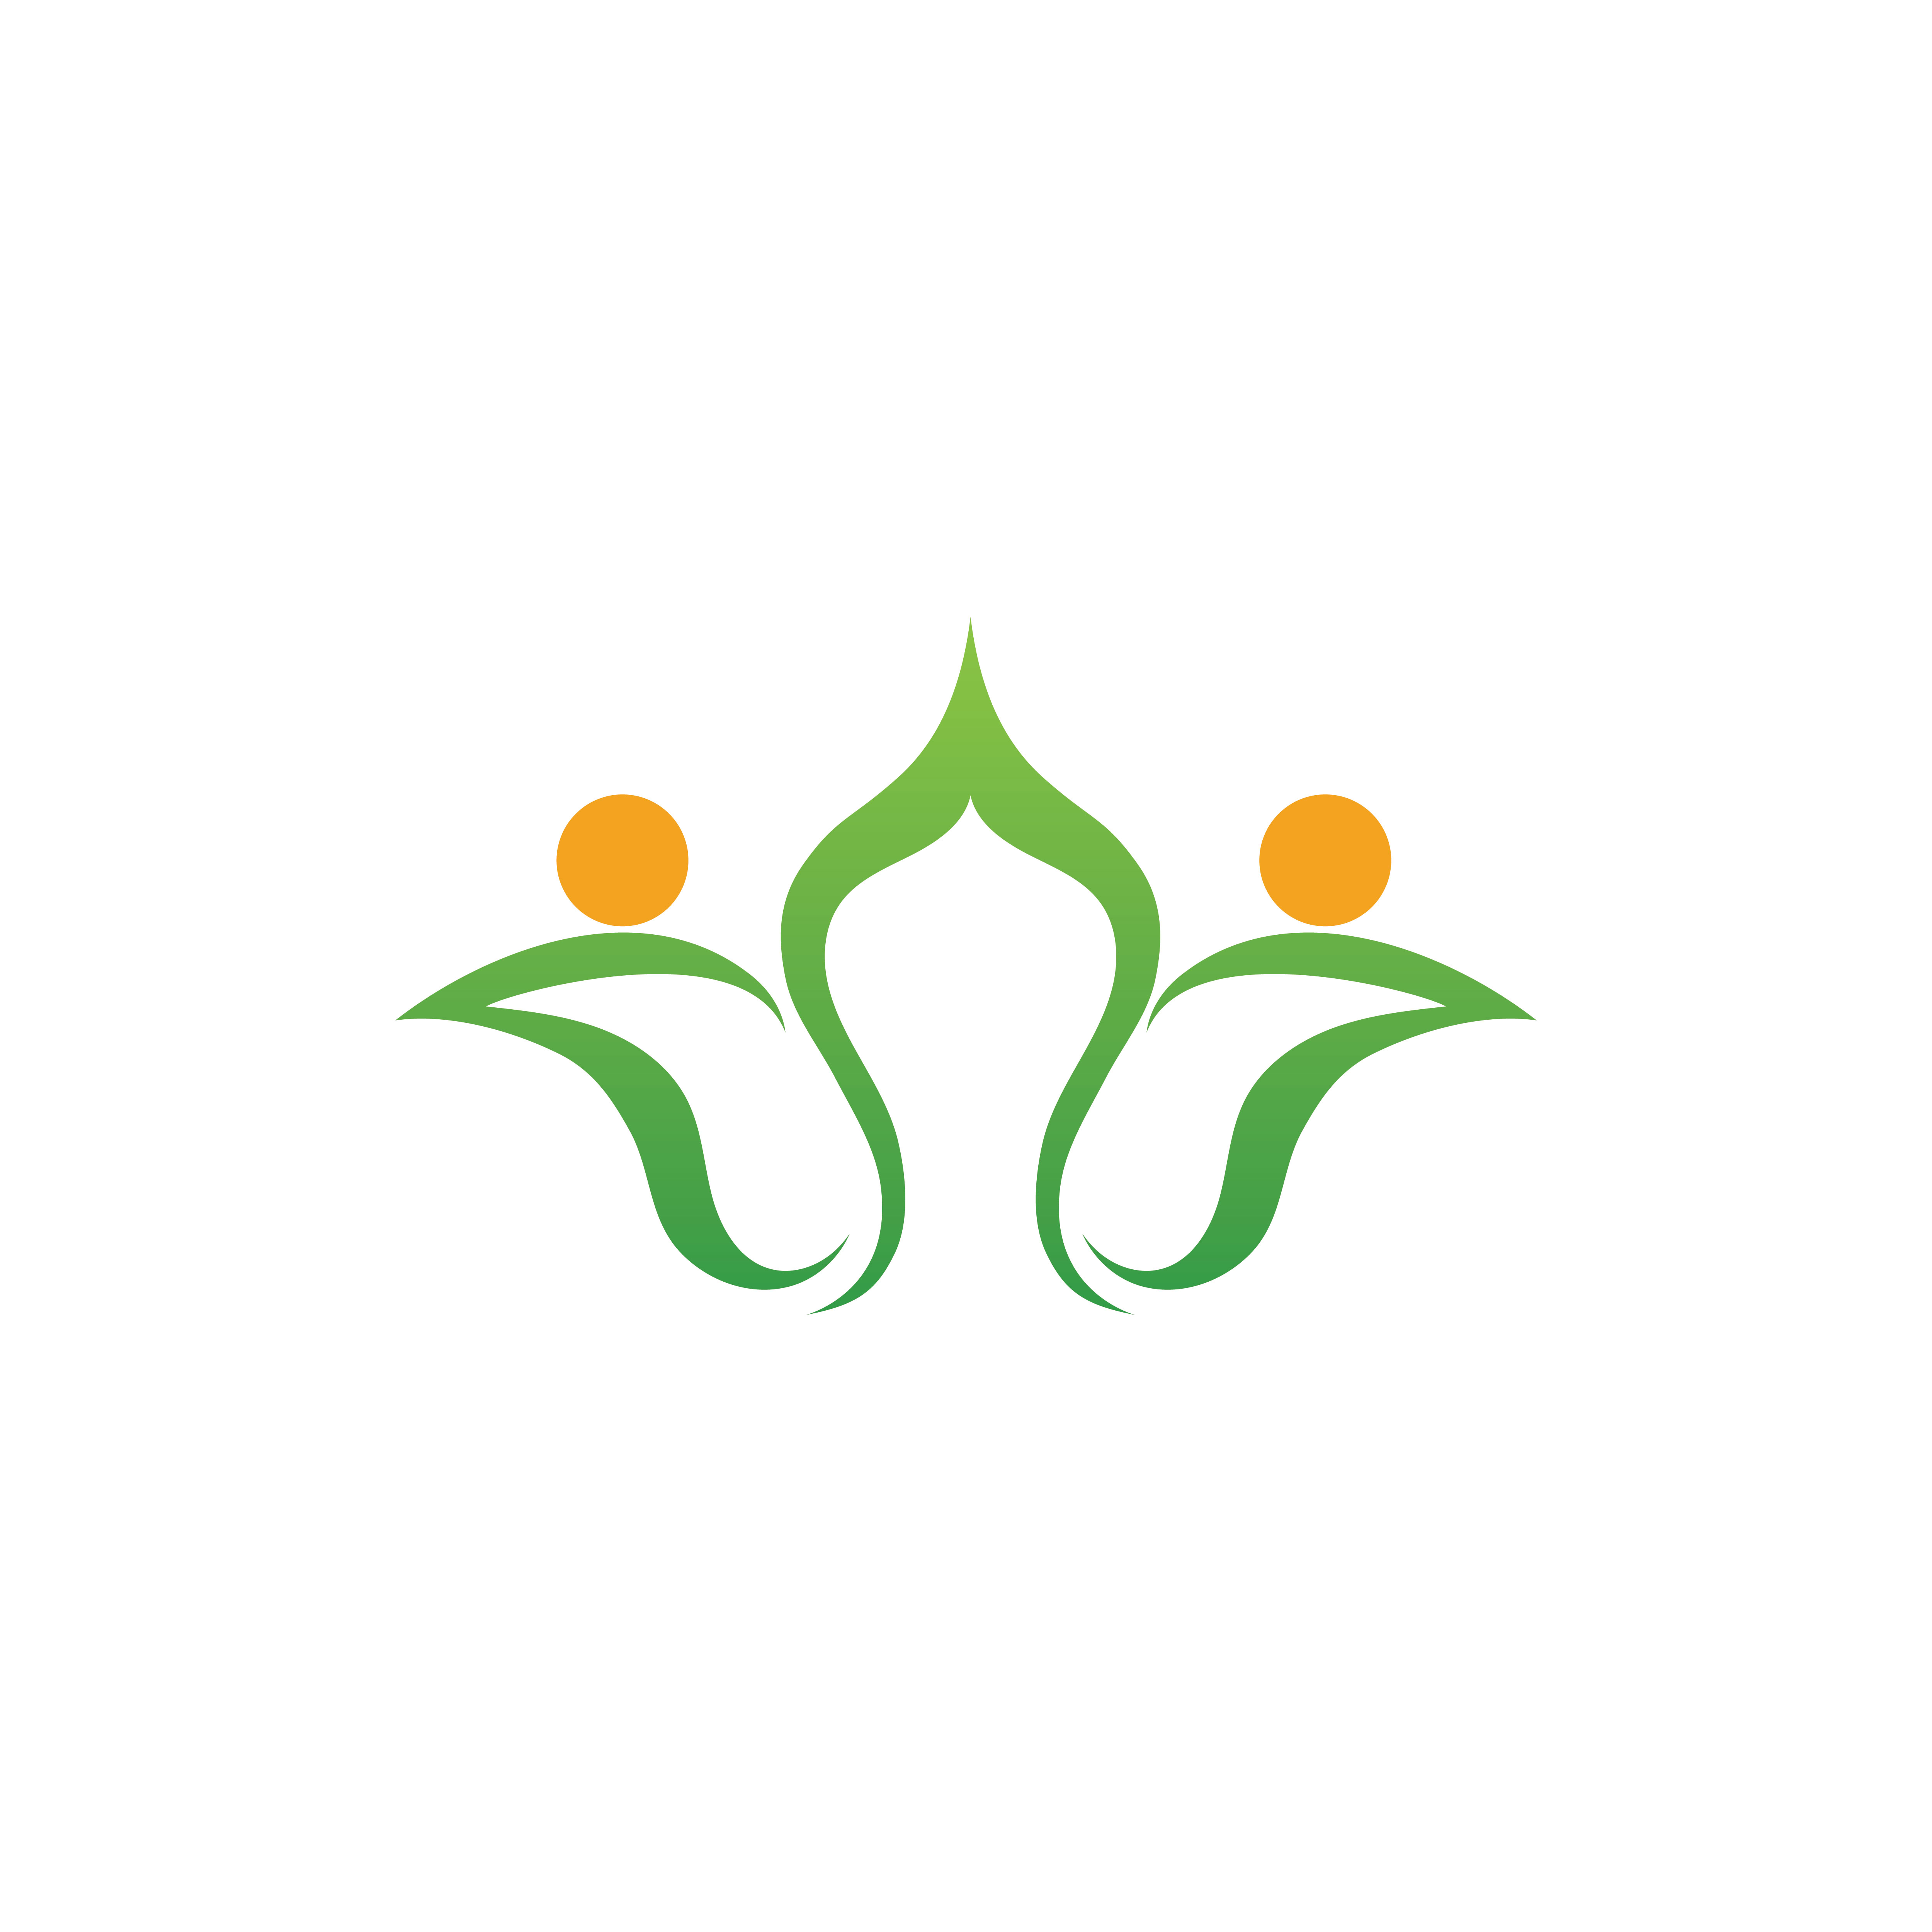 Lotus Flower Green Logo Design cover image.